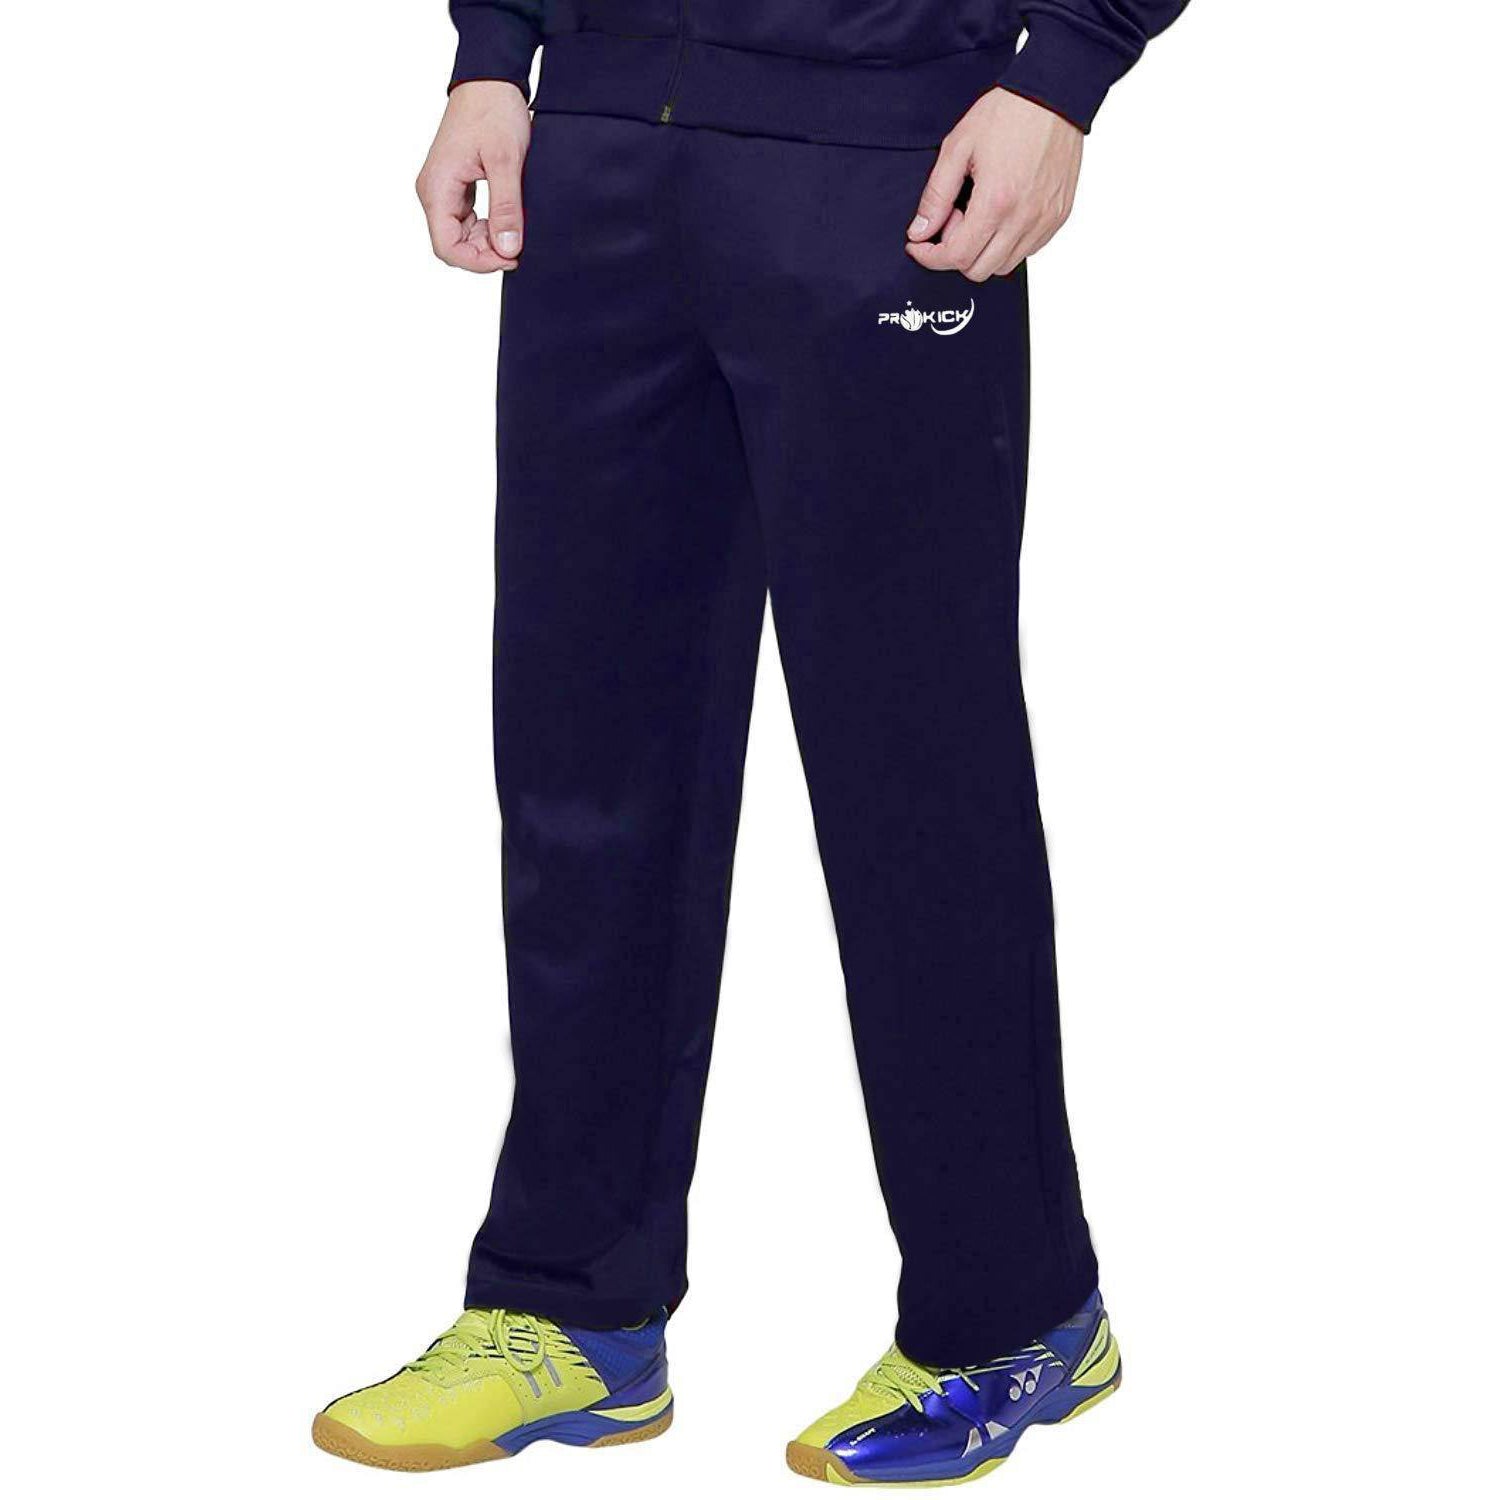 Prokick Men's Regular fit Sweat Control Sports Track Pant, Navy - Best Price online Prokicksports.com